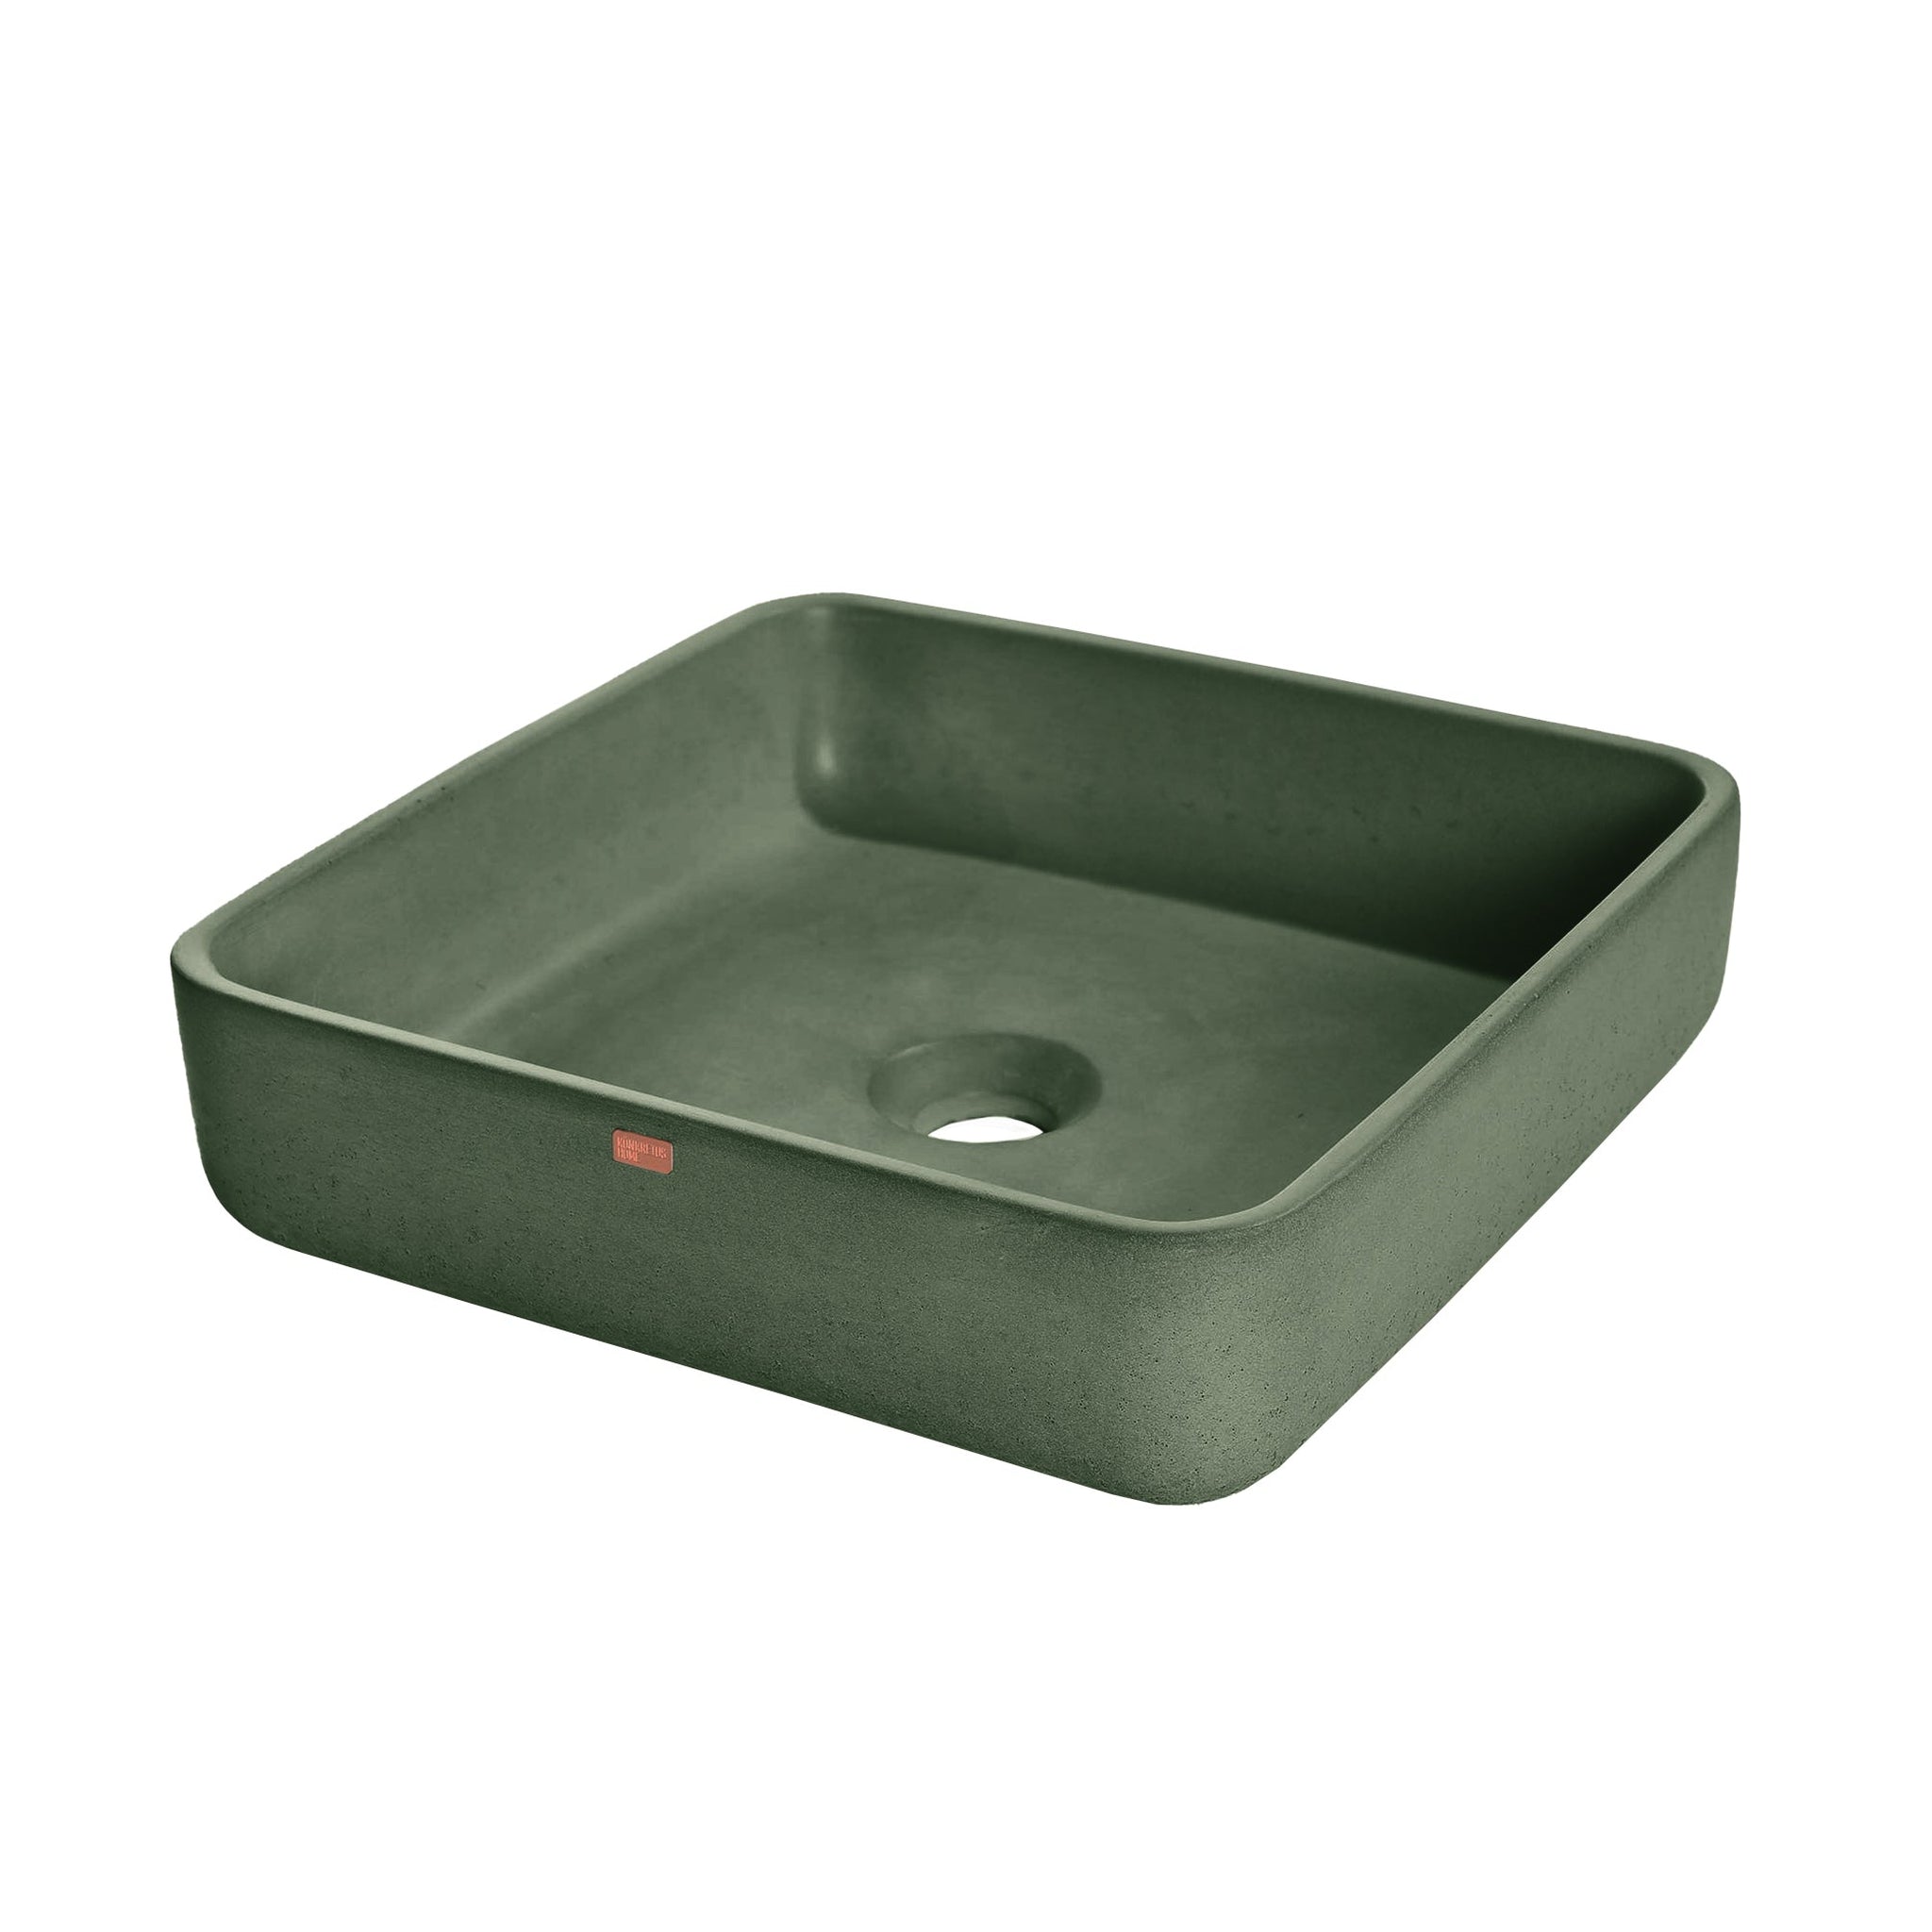 Konkretus, Konkretus Fladd03 15" Amazonic Green Top Mount Square Vessel Concrete Bathroom Sink